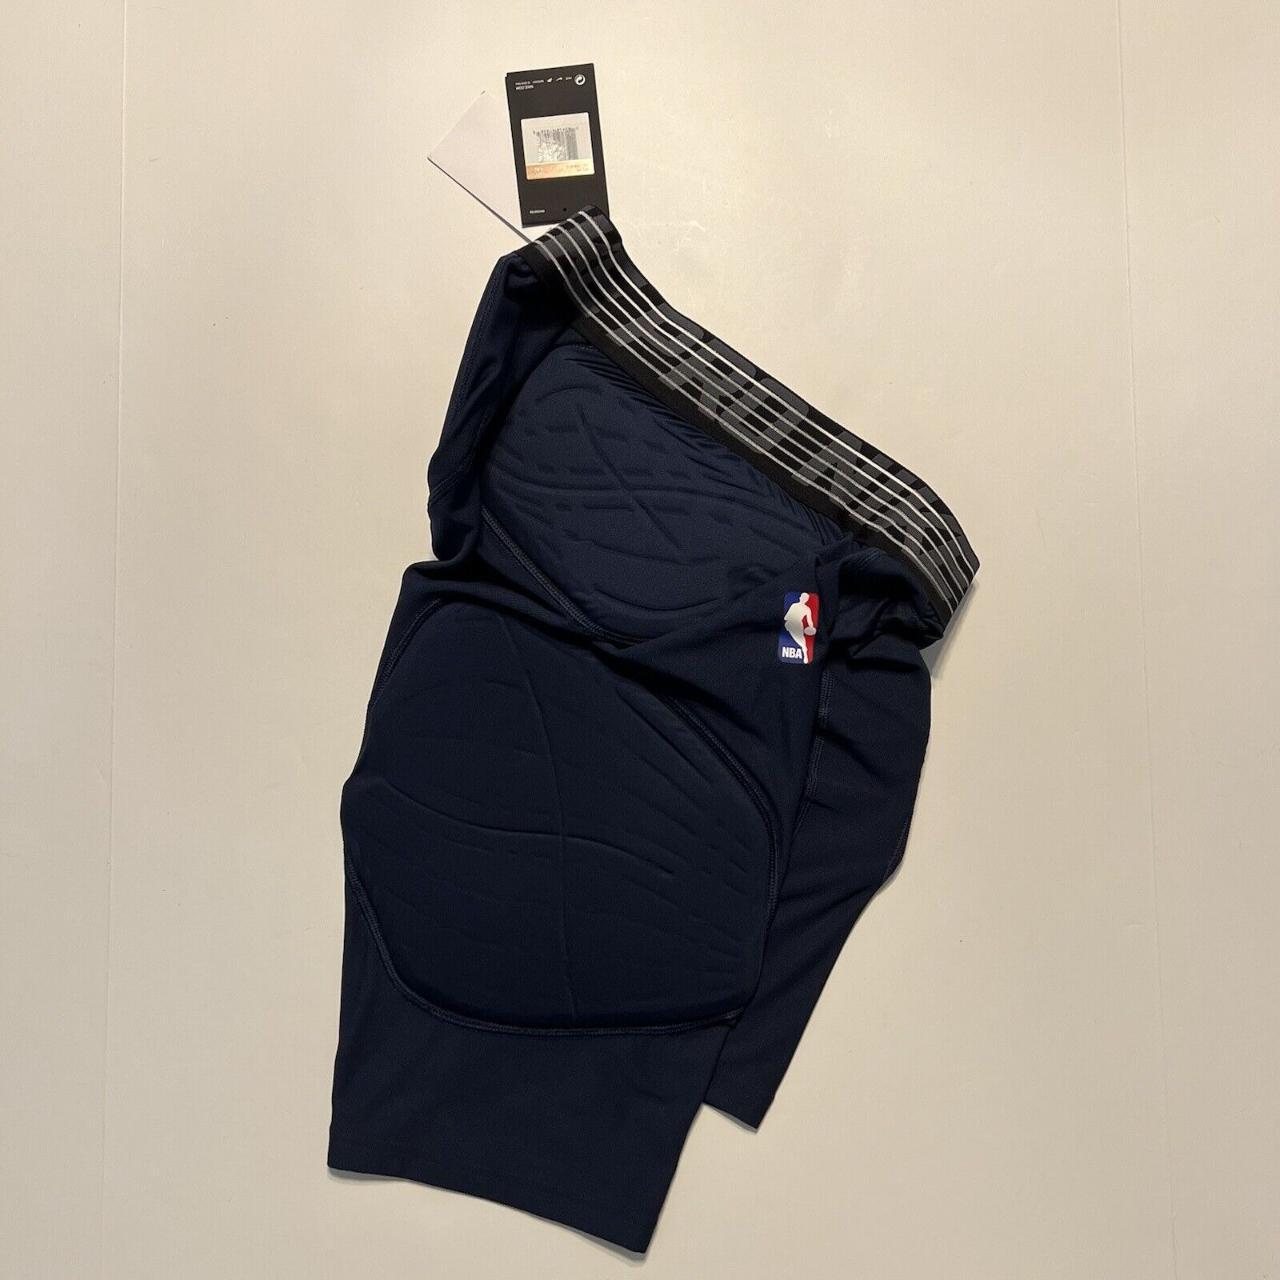 Nike NBA Pro Hyperstrong Padded Basketball Pants